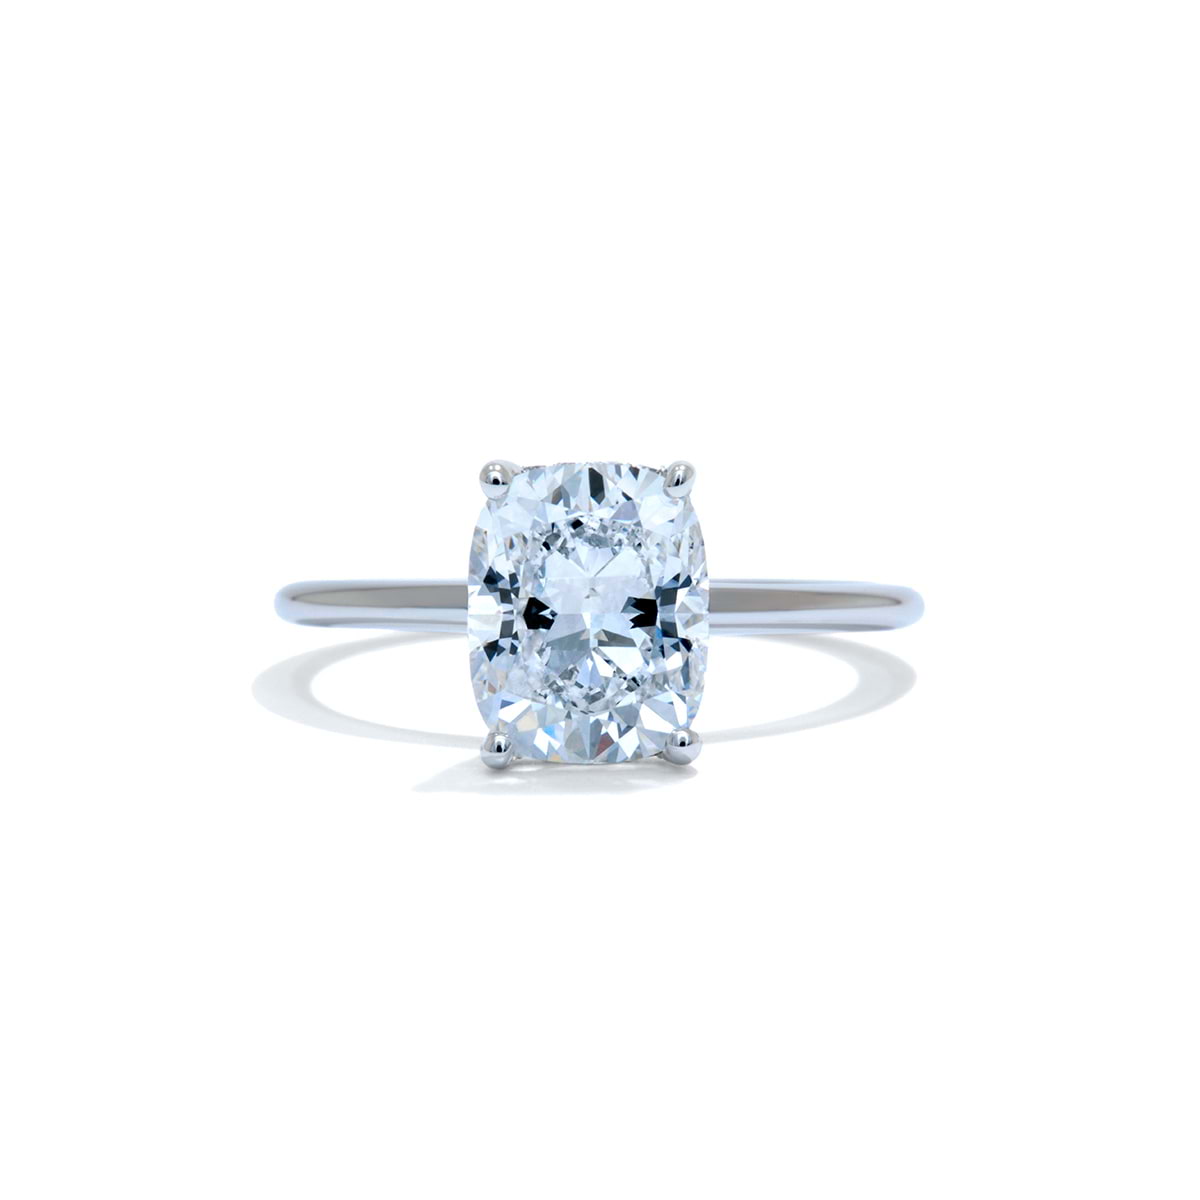 DE BEERS GIA Diamond Engagement Ring 1.33Ct Round Brilliant VS1/H